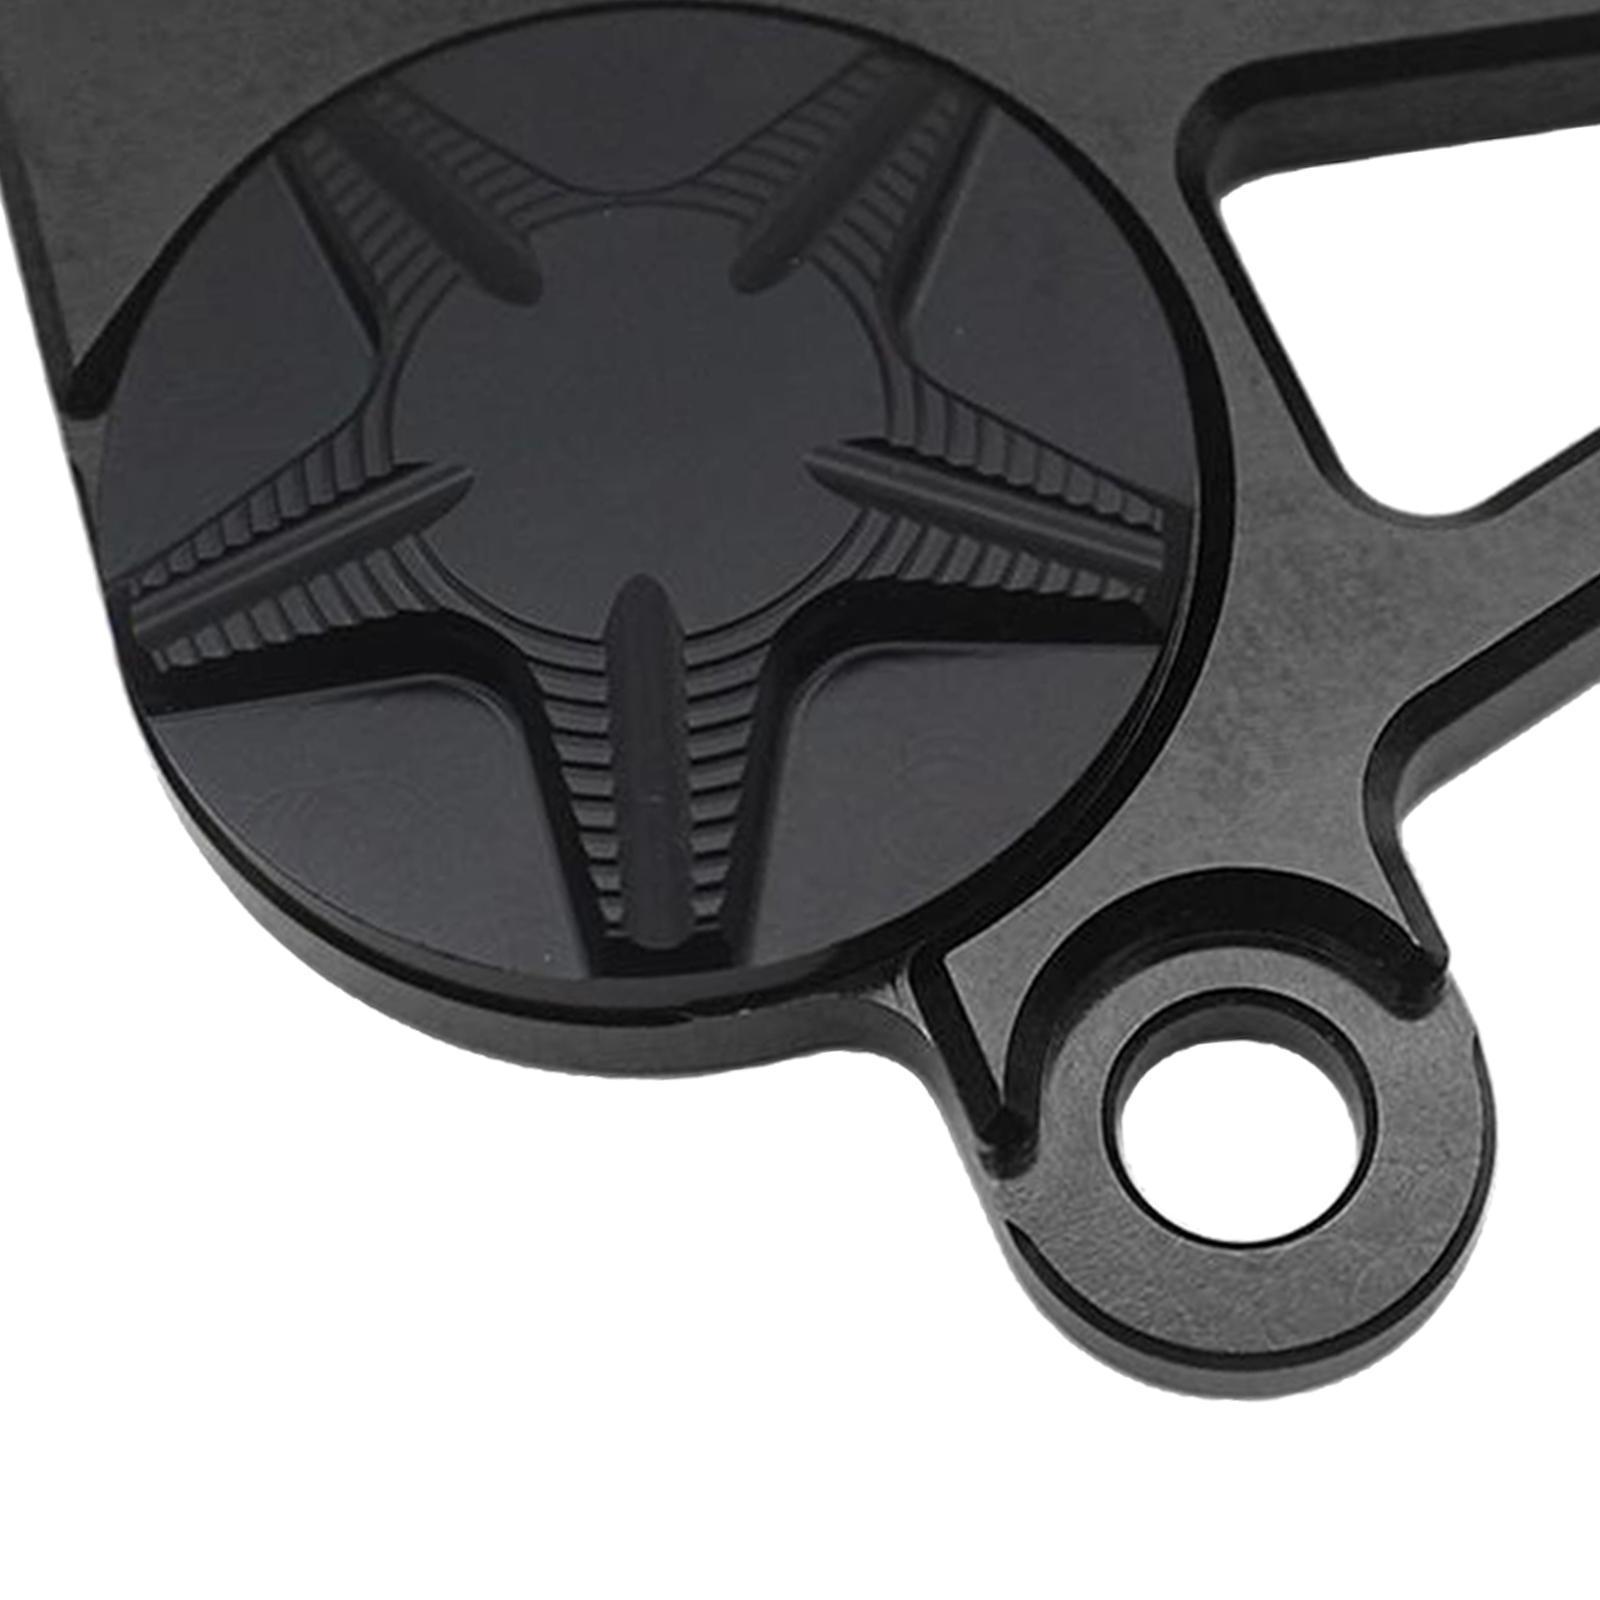 Motorcycle Rear Brake Pump Cover Cap Protector for Yamaha NMAX155